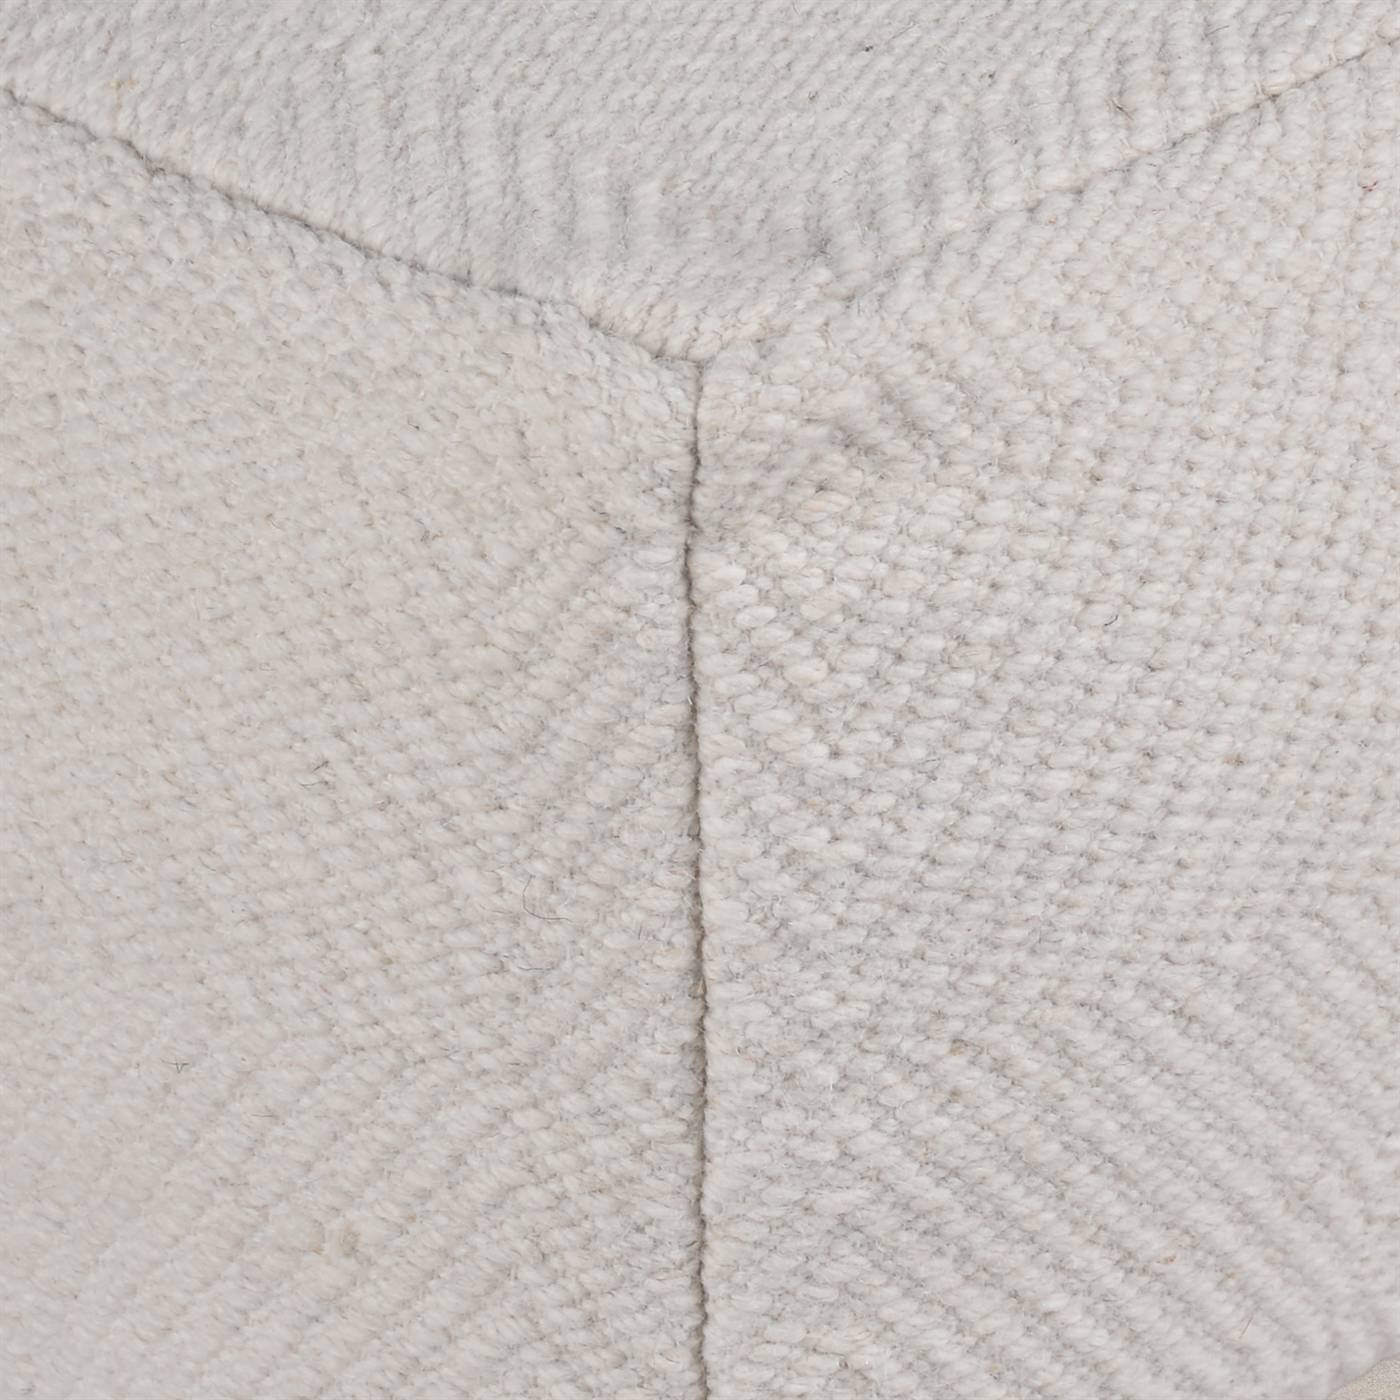 Leoti Pouf, 40x40x40 cm, Natural White, Wool, Hand Woven, Pitloom, Flat Weave